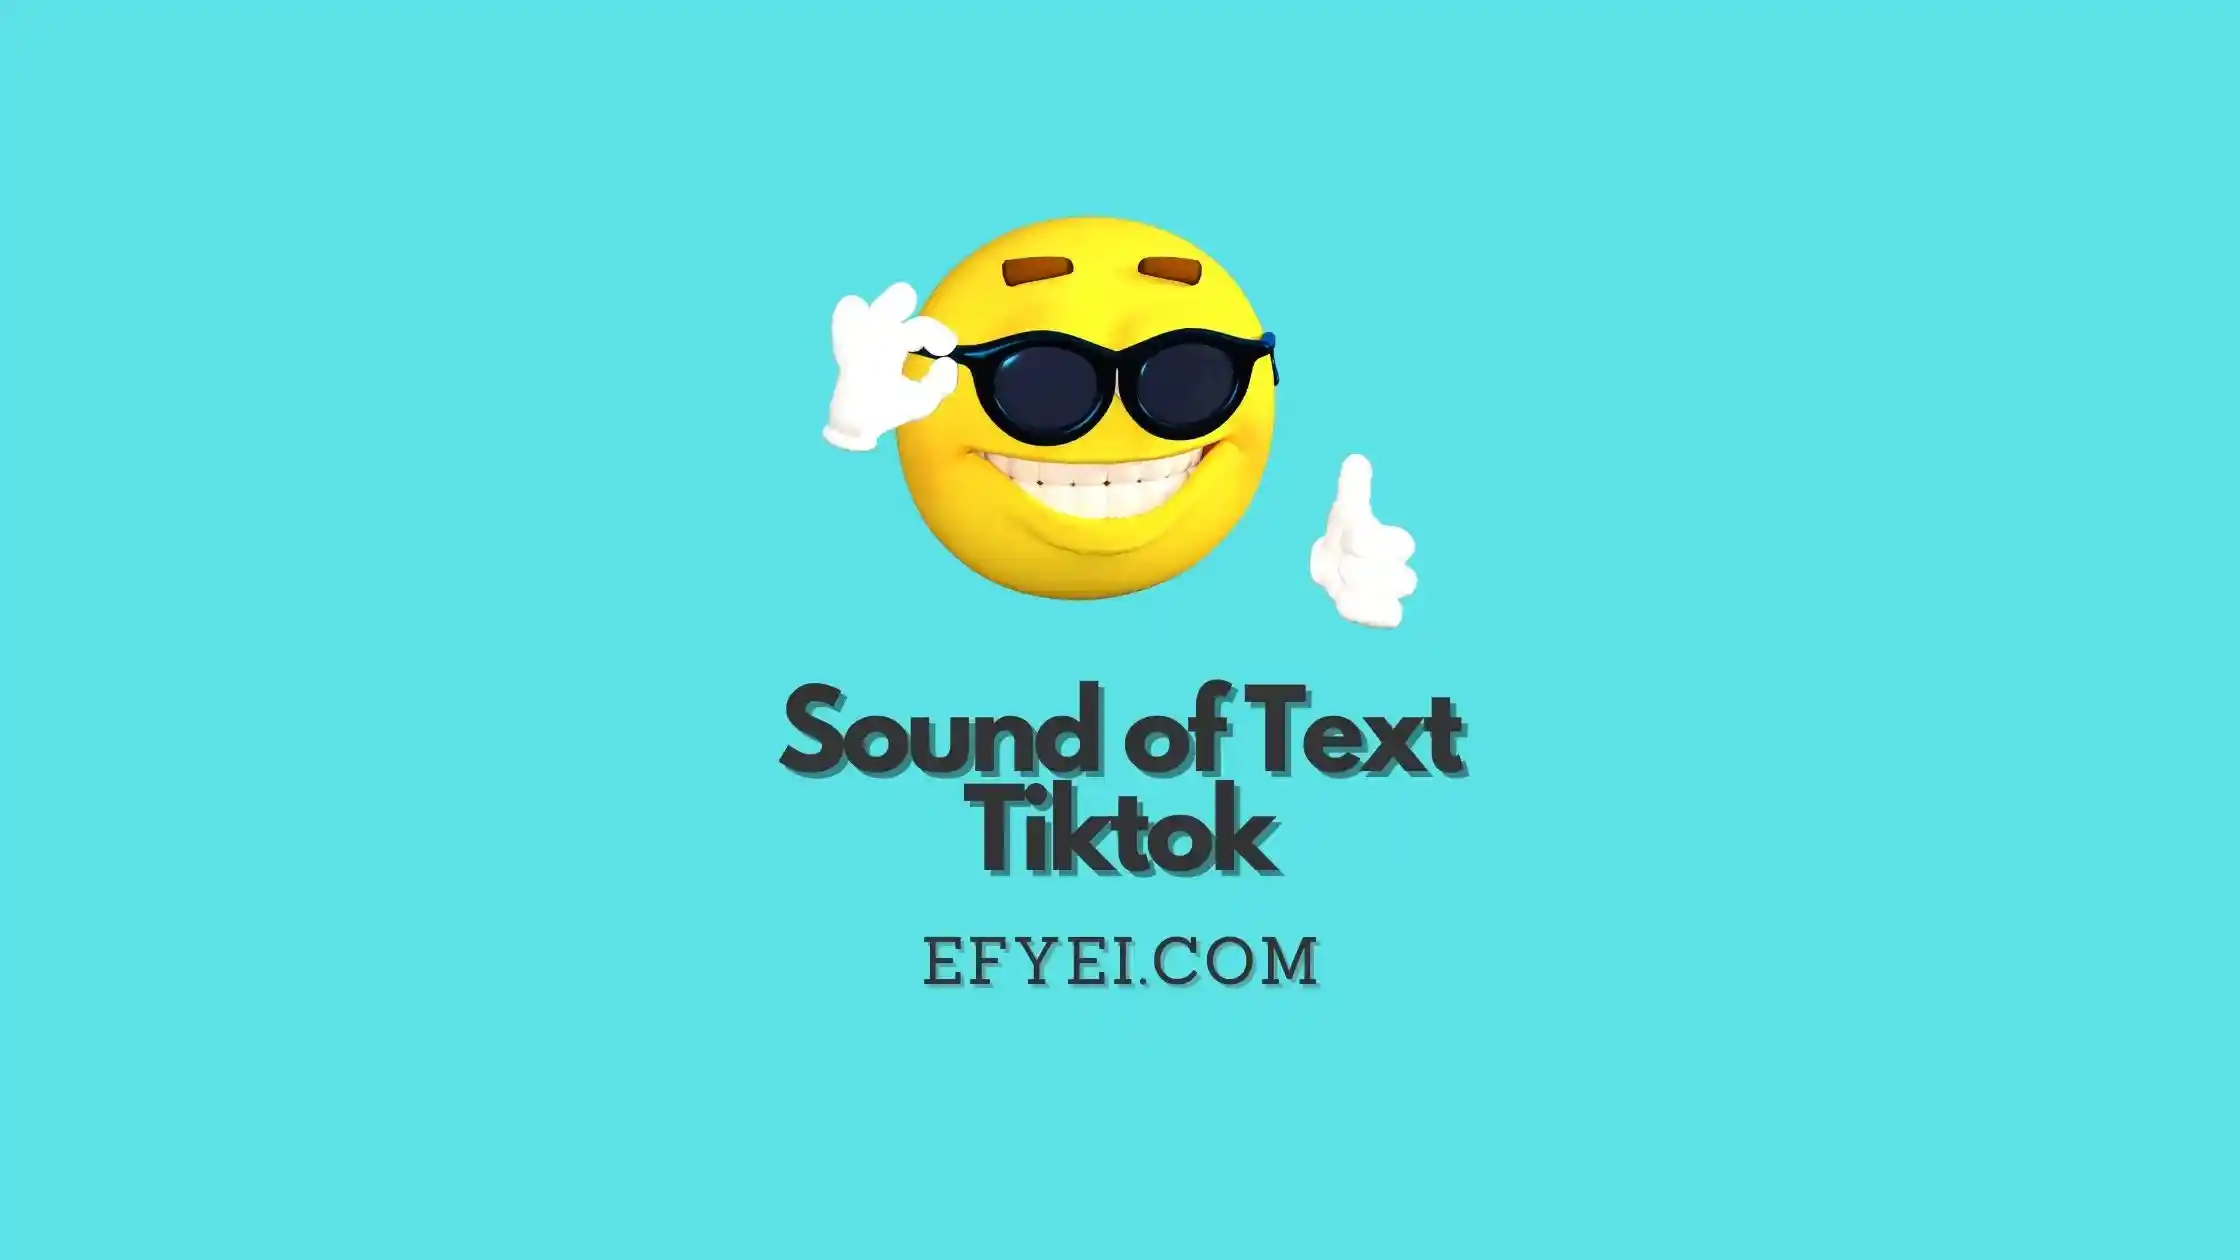 Sound of text TikTok